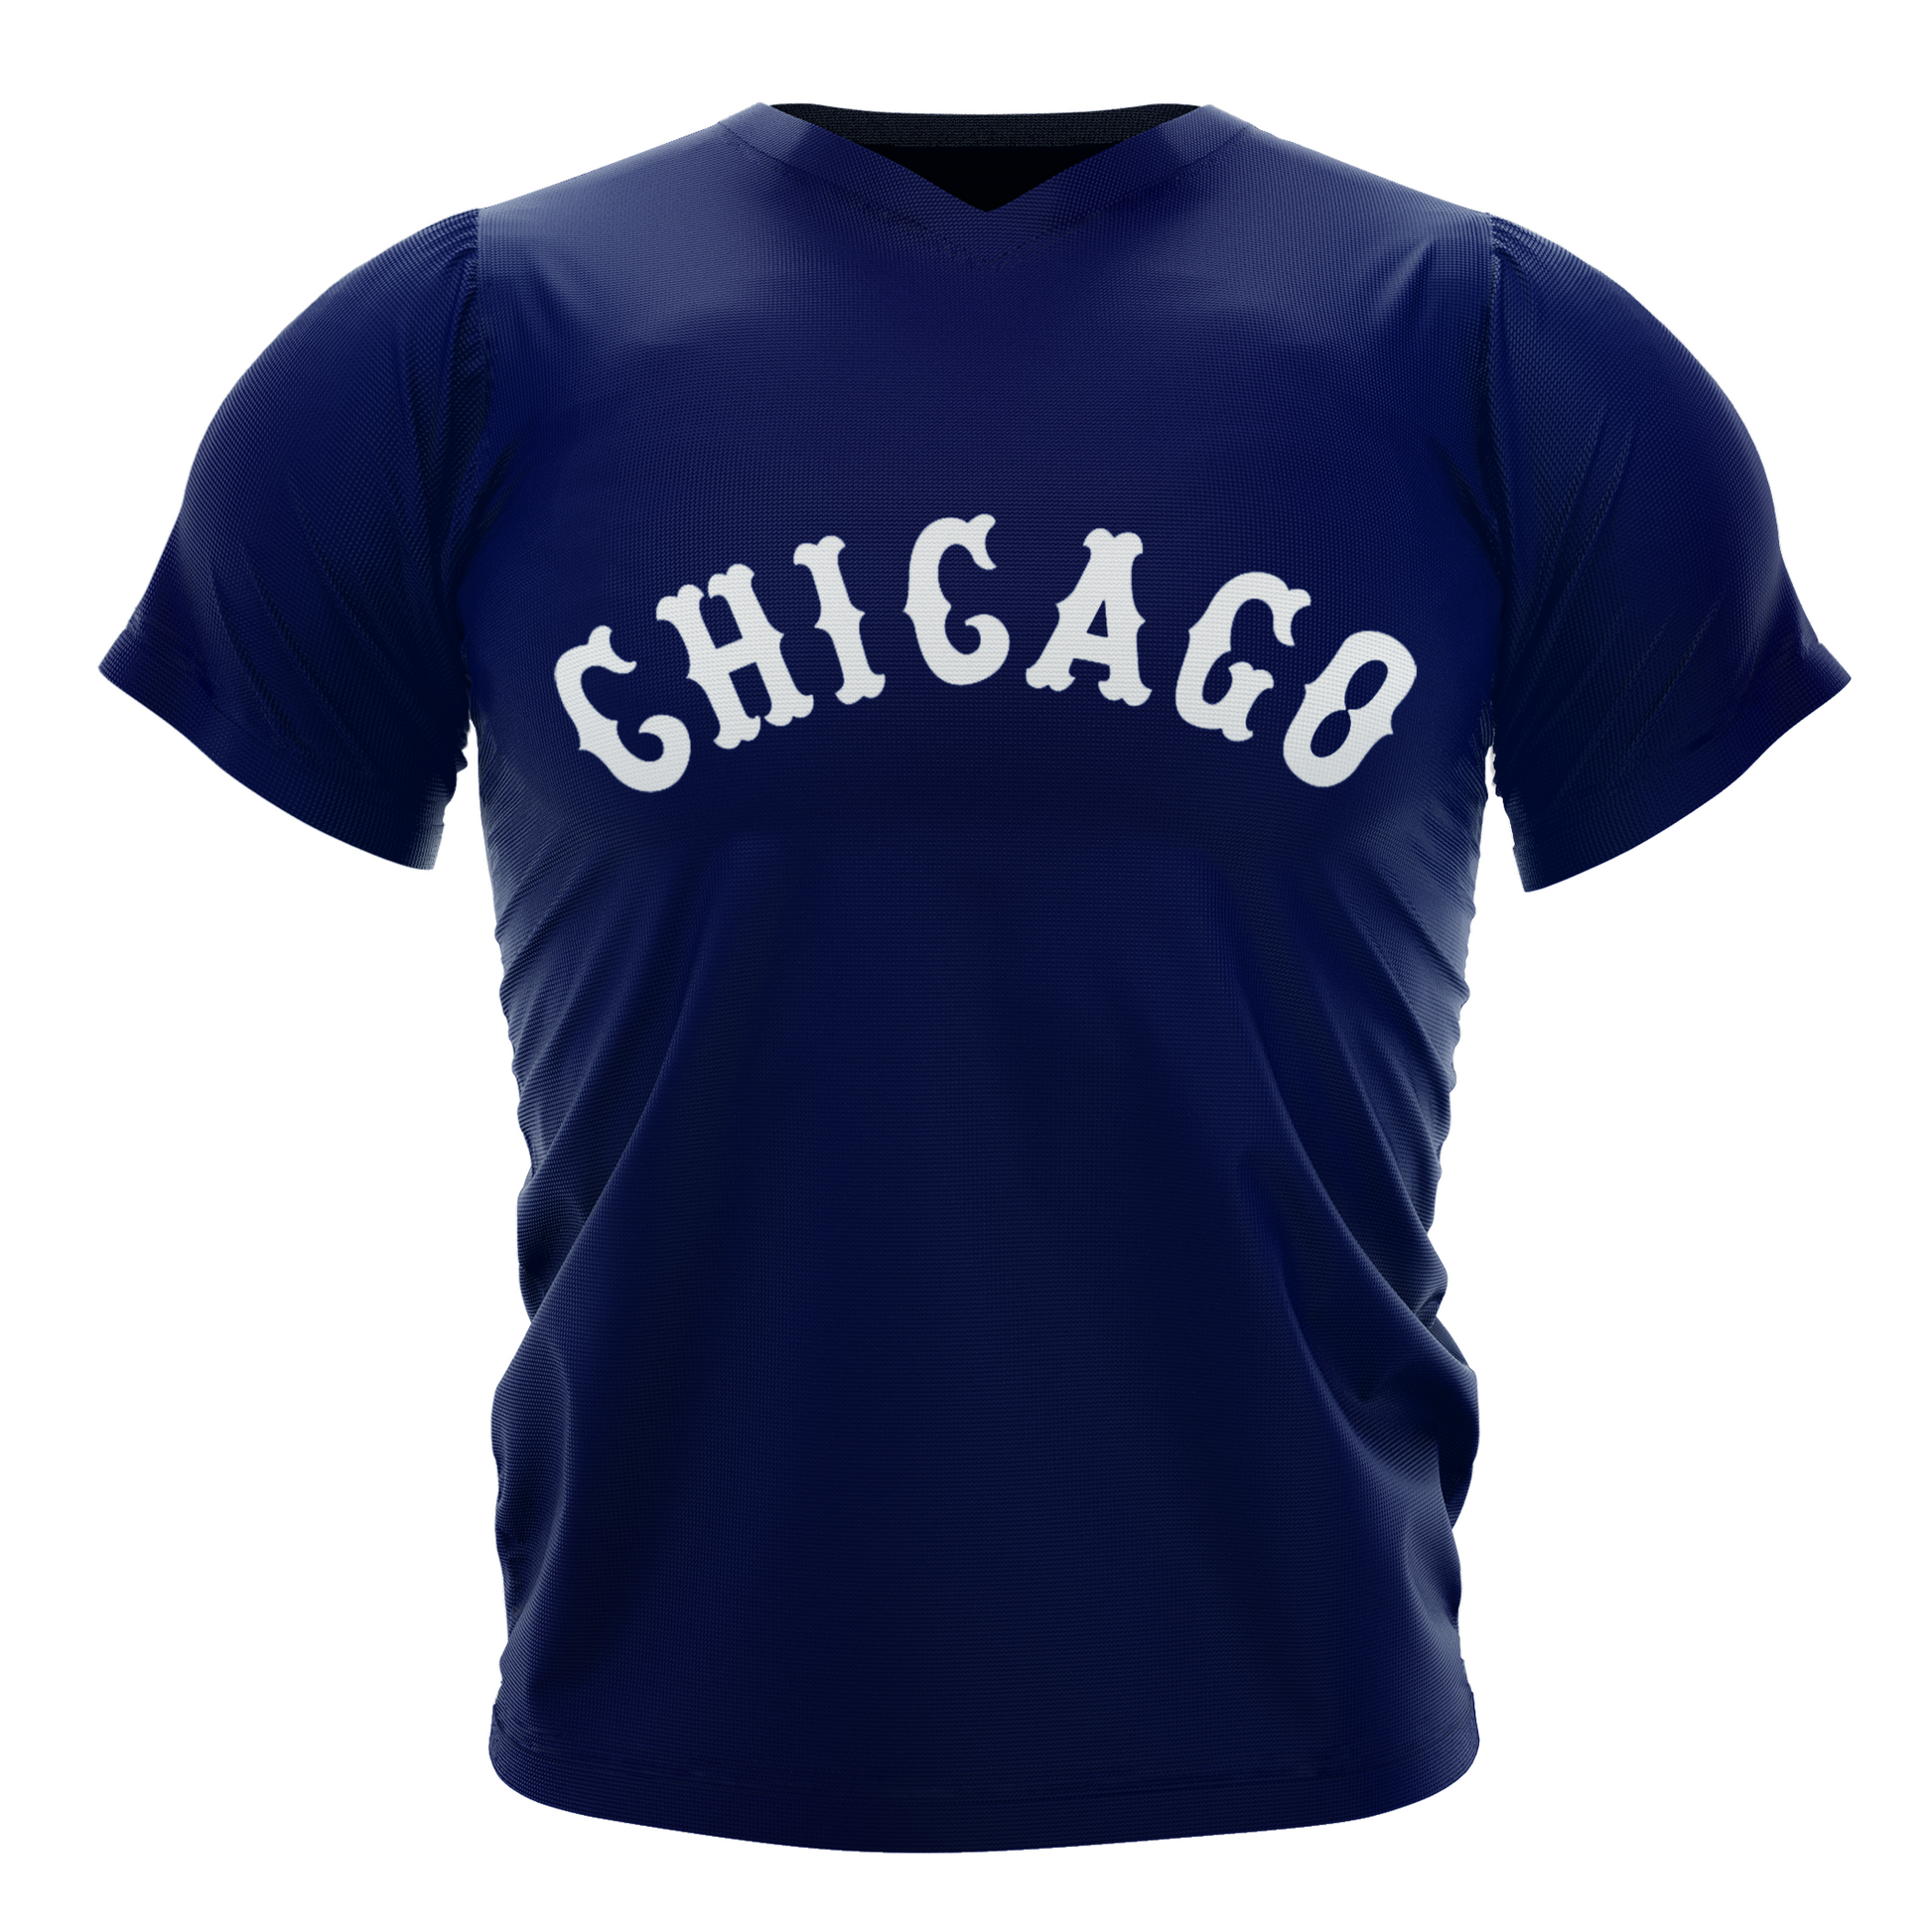 Southside Chicago Baseball Jersey – Royal Retros